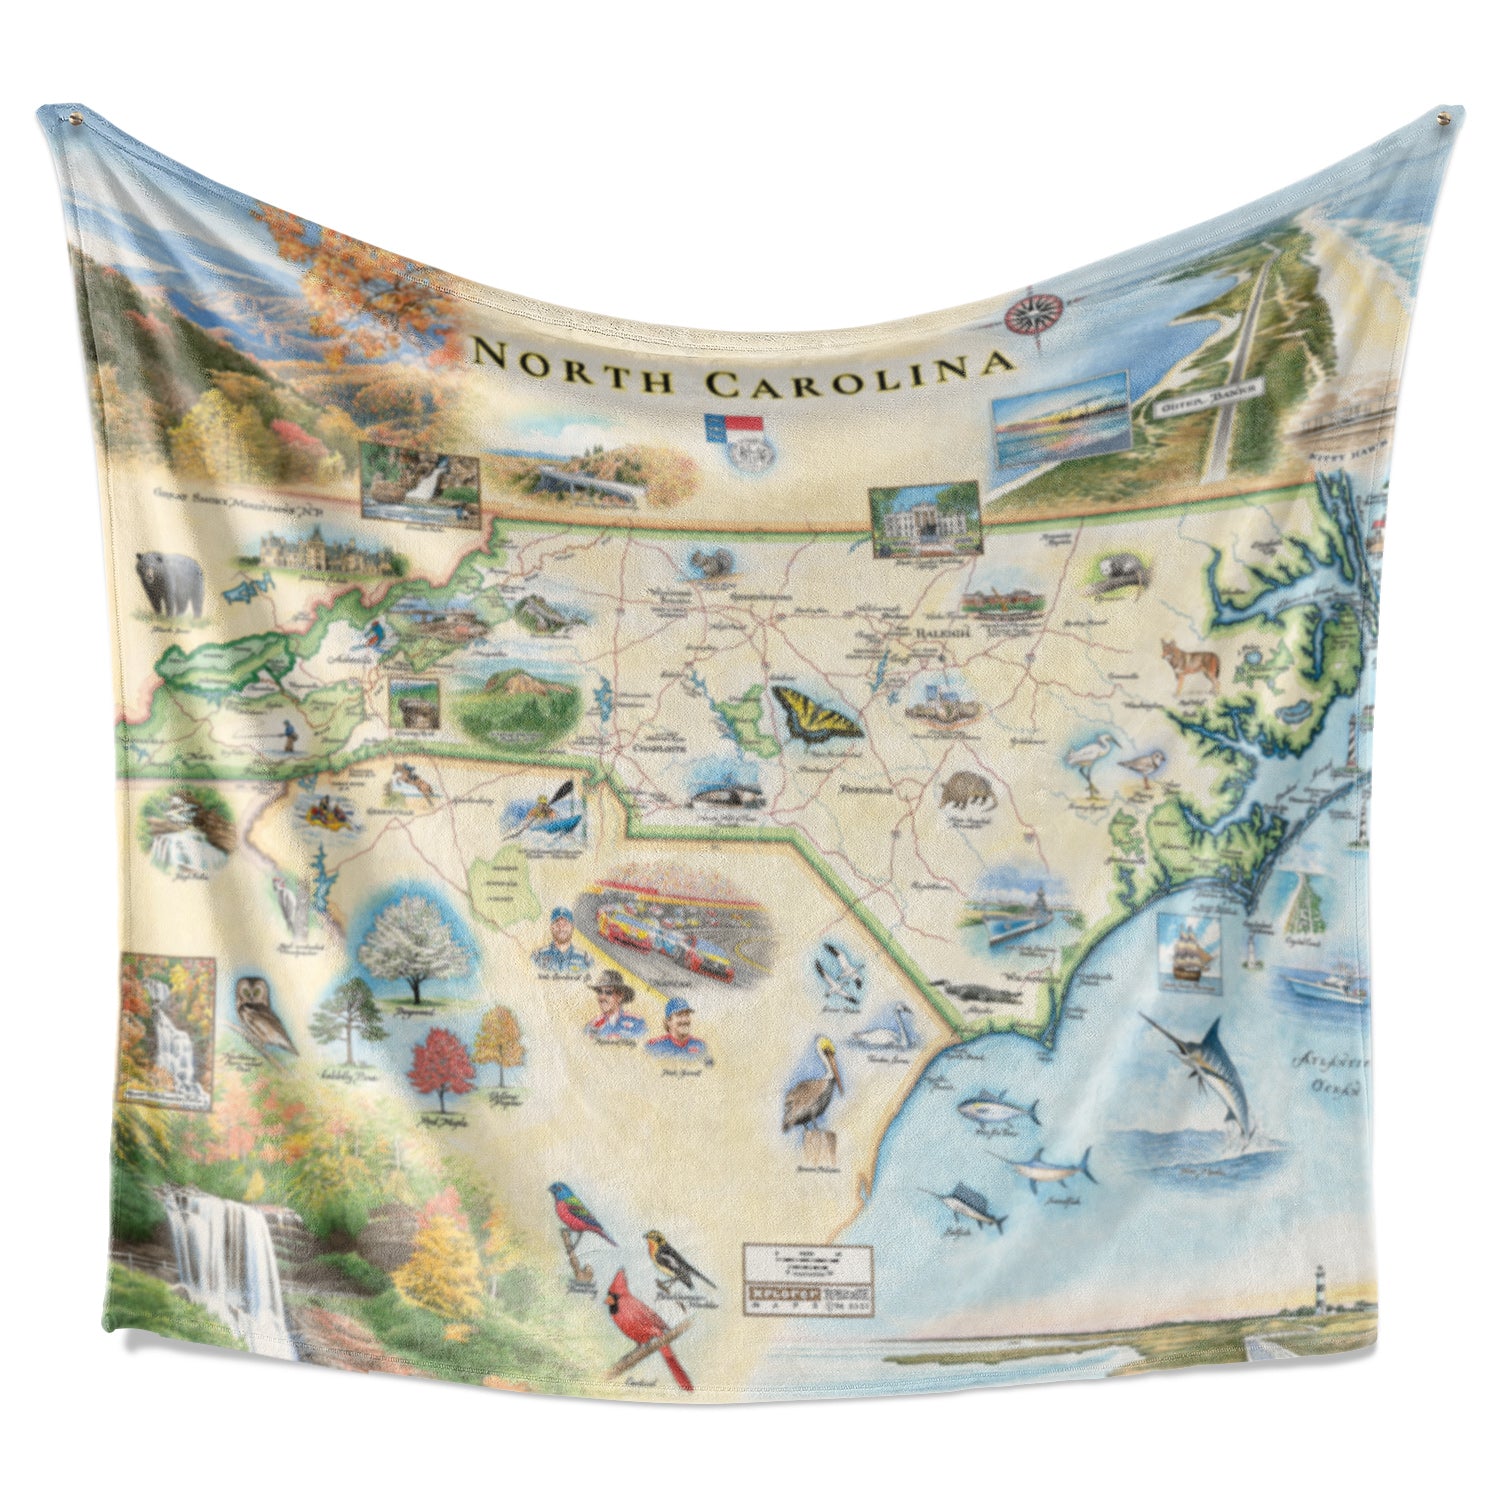 Hanging fleece blanket depicting North Carolina. Blanket features an artistic map. Measures 58